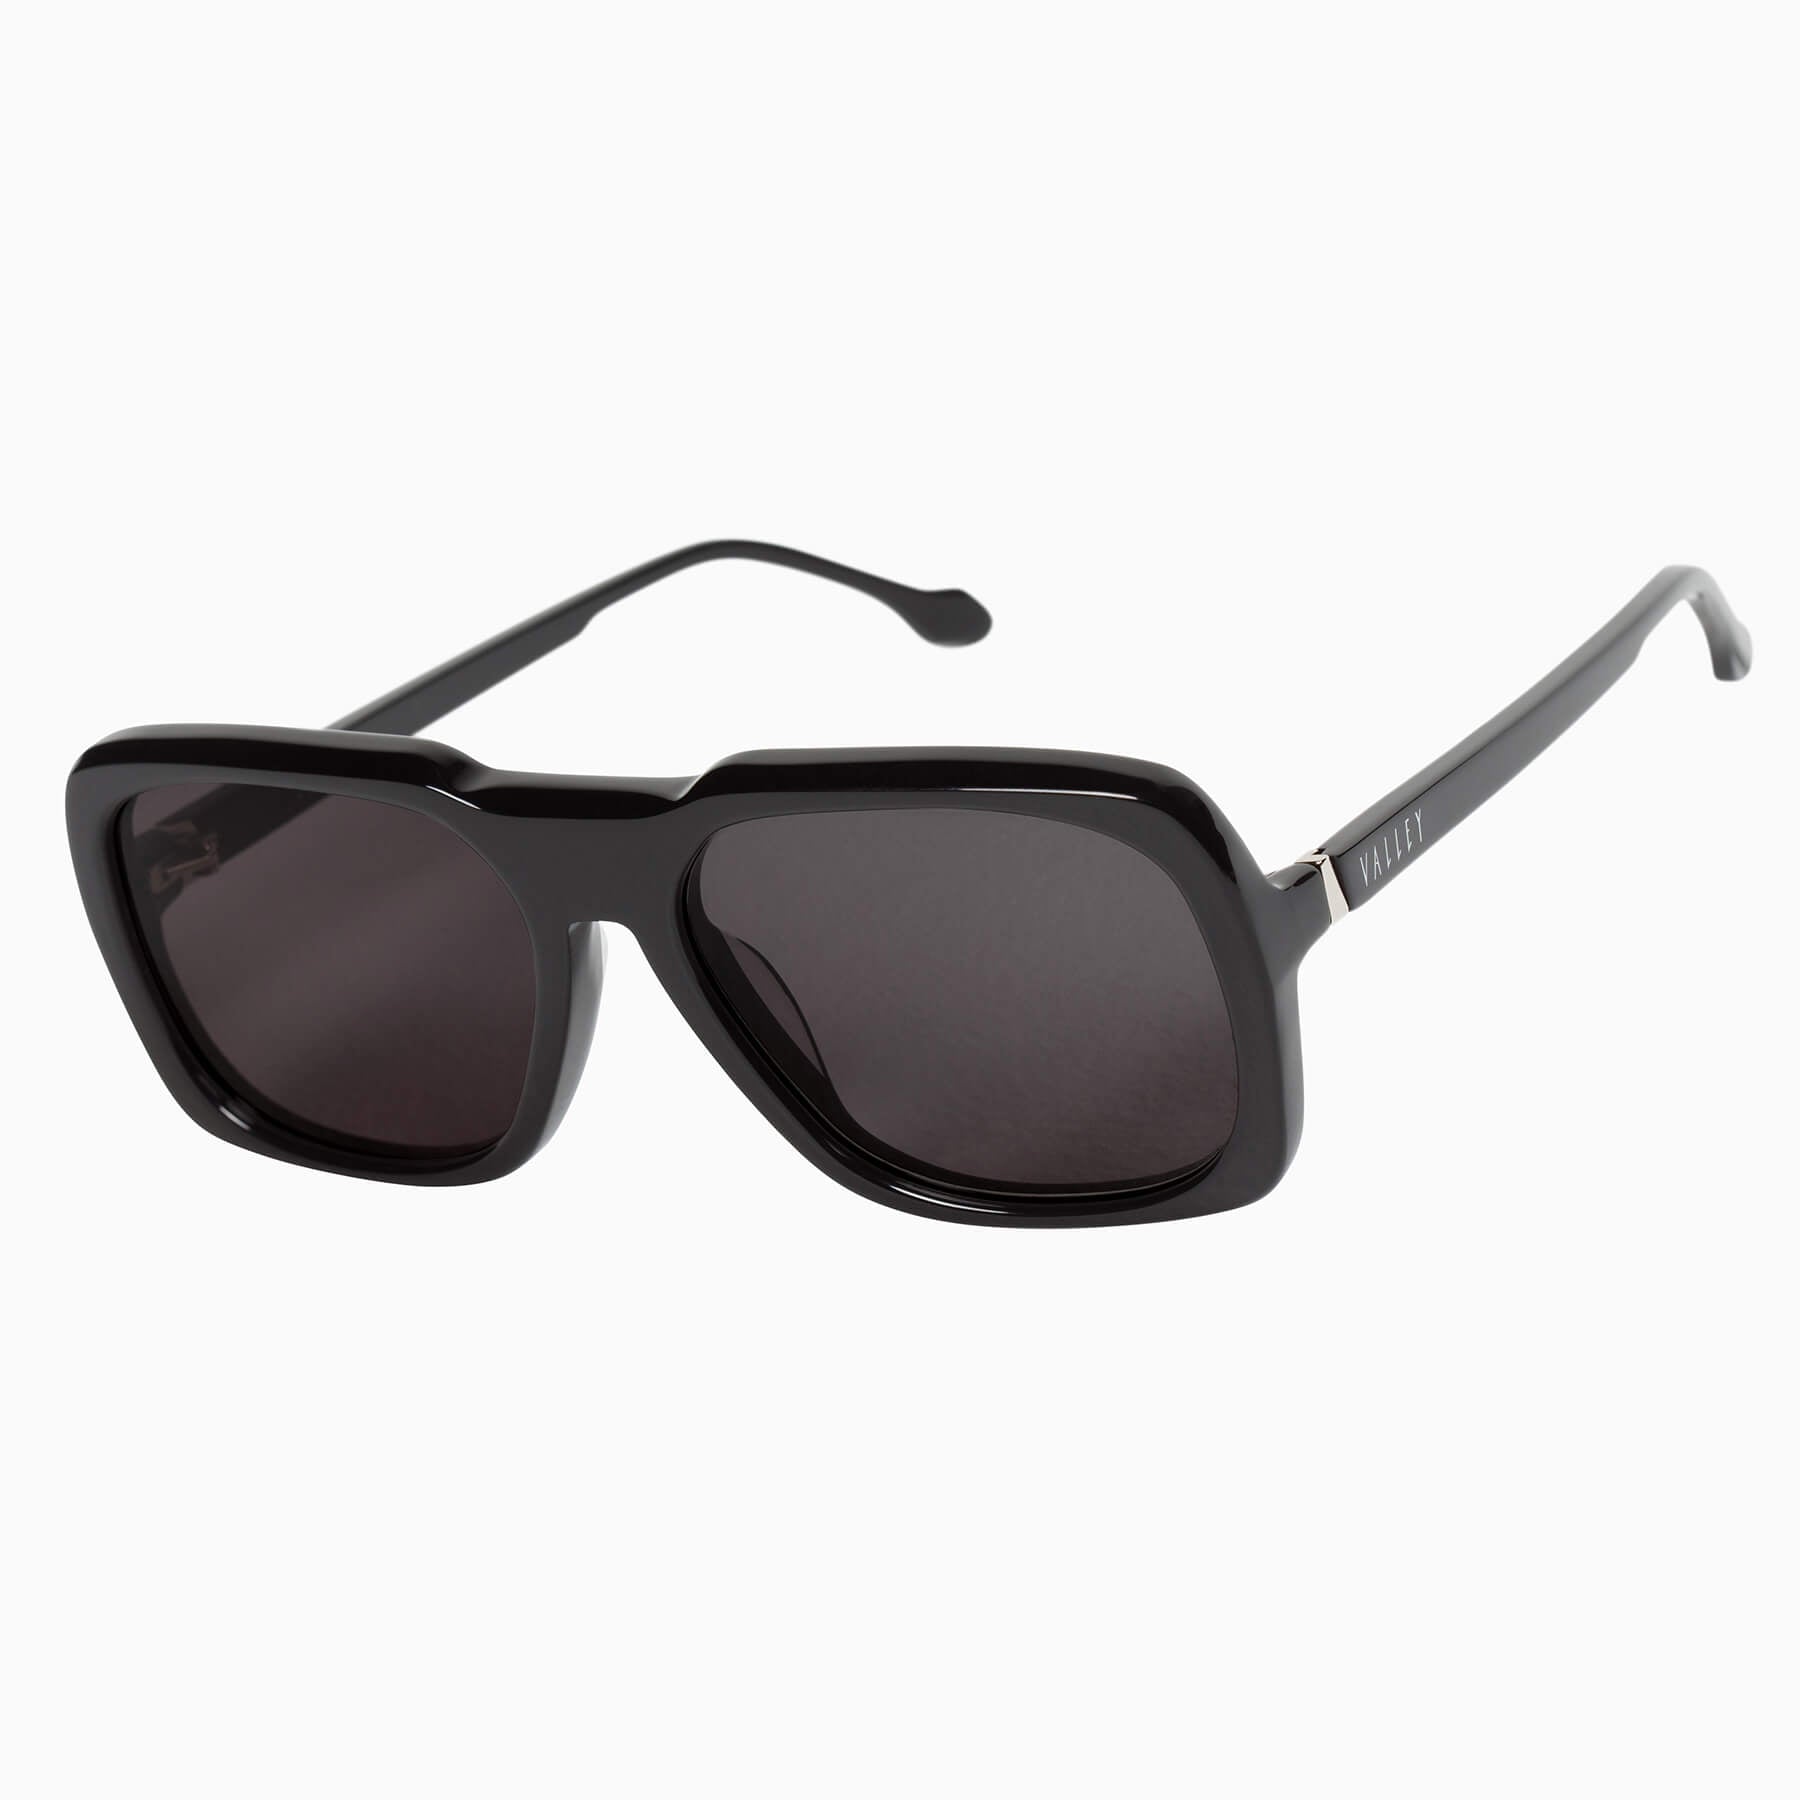 Valley Eyewear | Memoir | Sunglasses - Gloss Black w. Silver Metal Trim / Black Lens